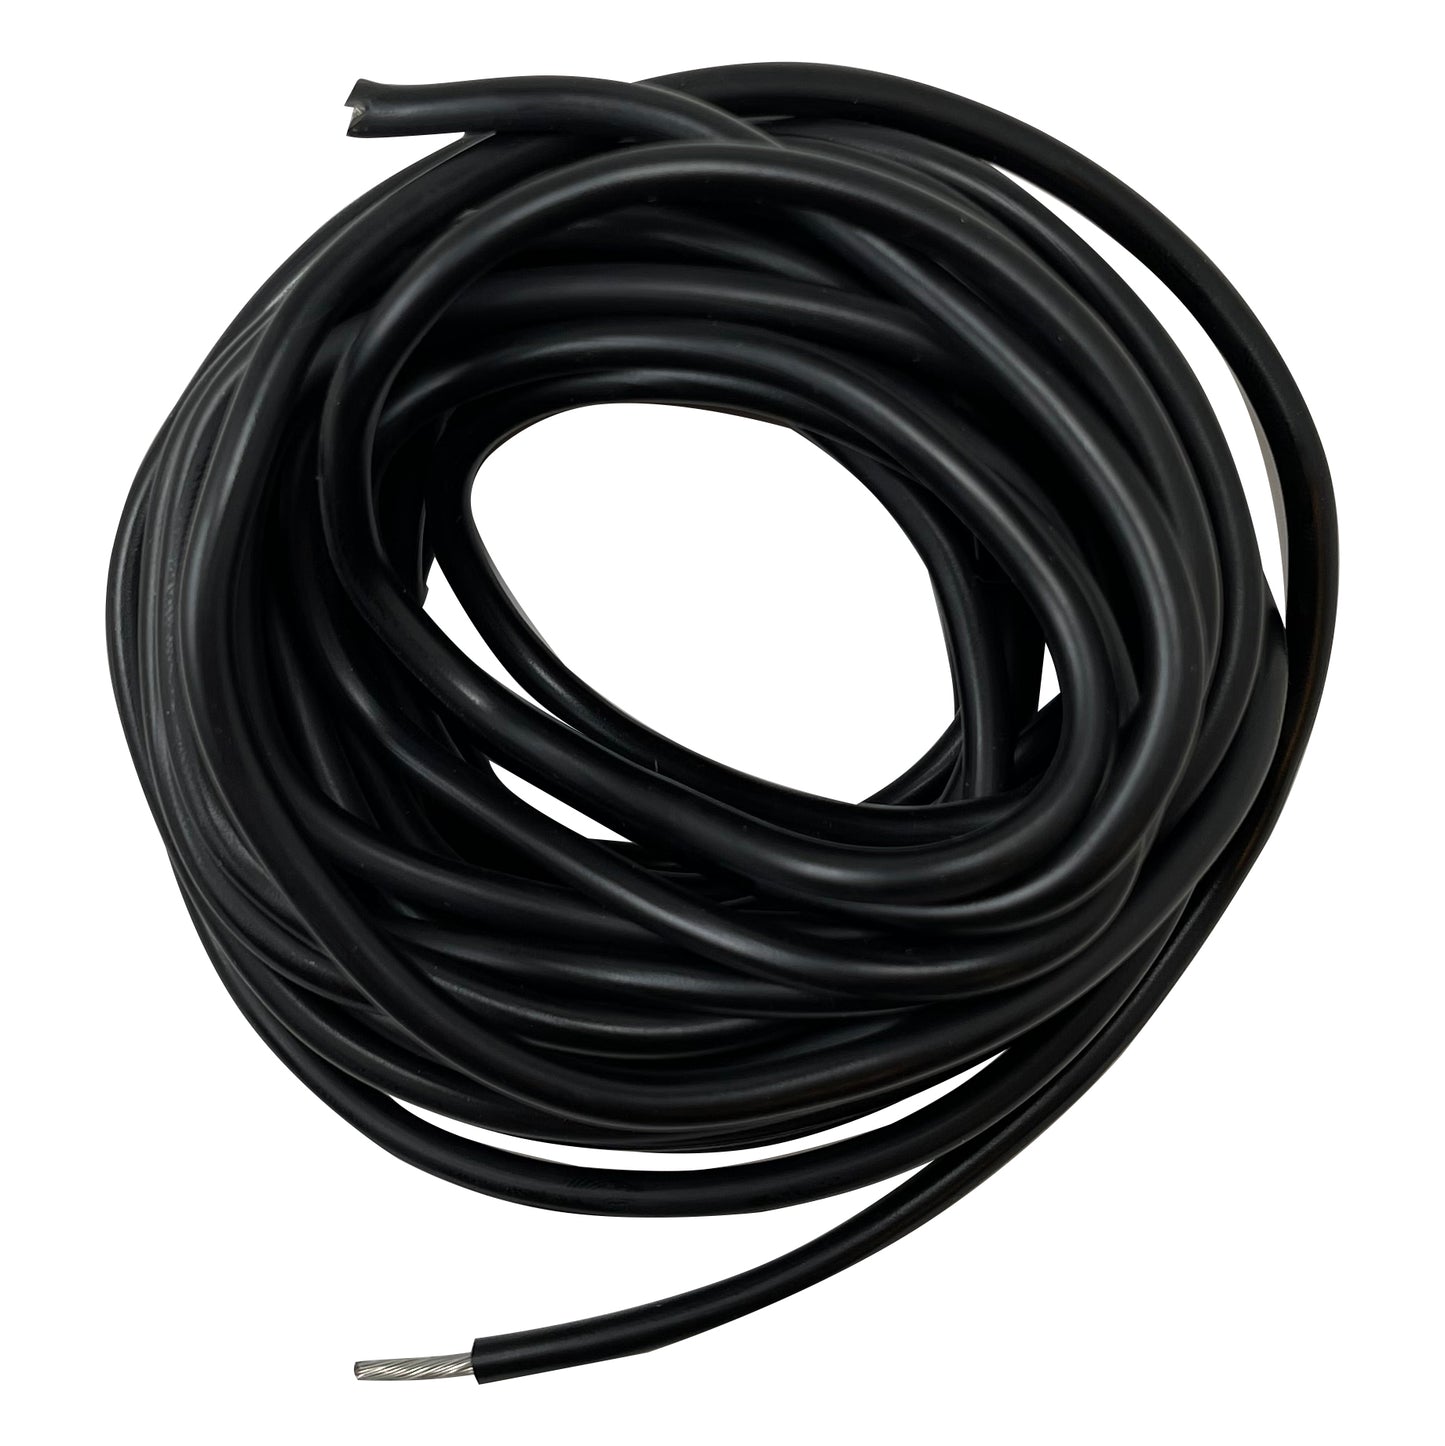 10 Gauge Universal Automotive Fusible Link Wire - 100' FT Spool